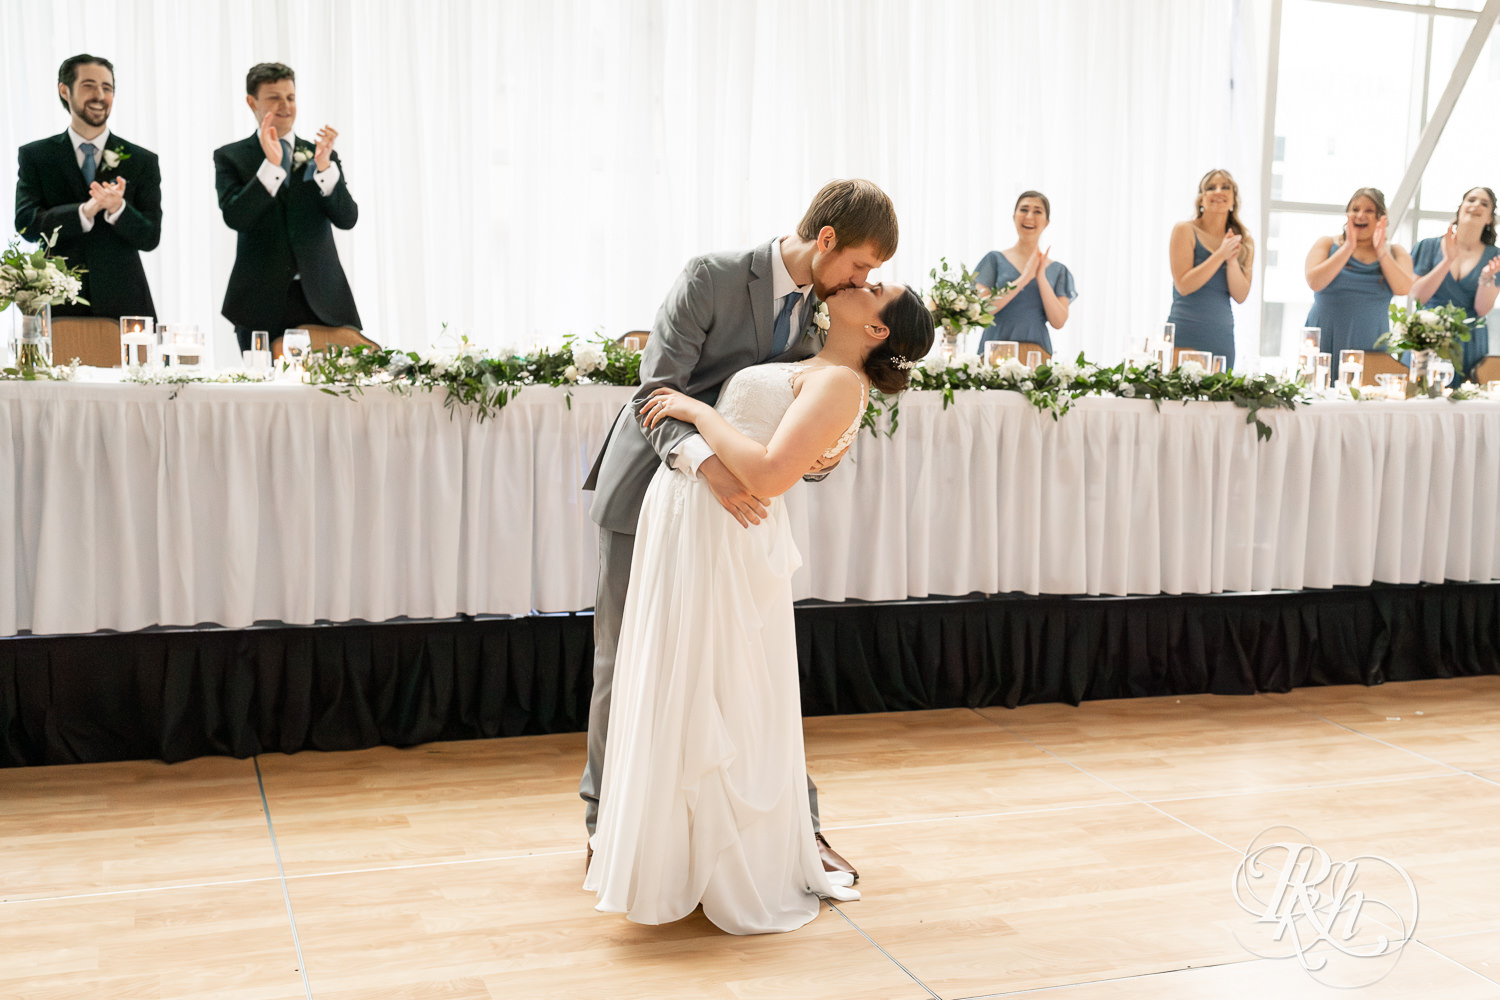 Bride and groom enter wedding reception at Doubletree Hilton Saint Paul in Saint Paul, Minnesota.